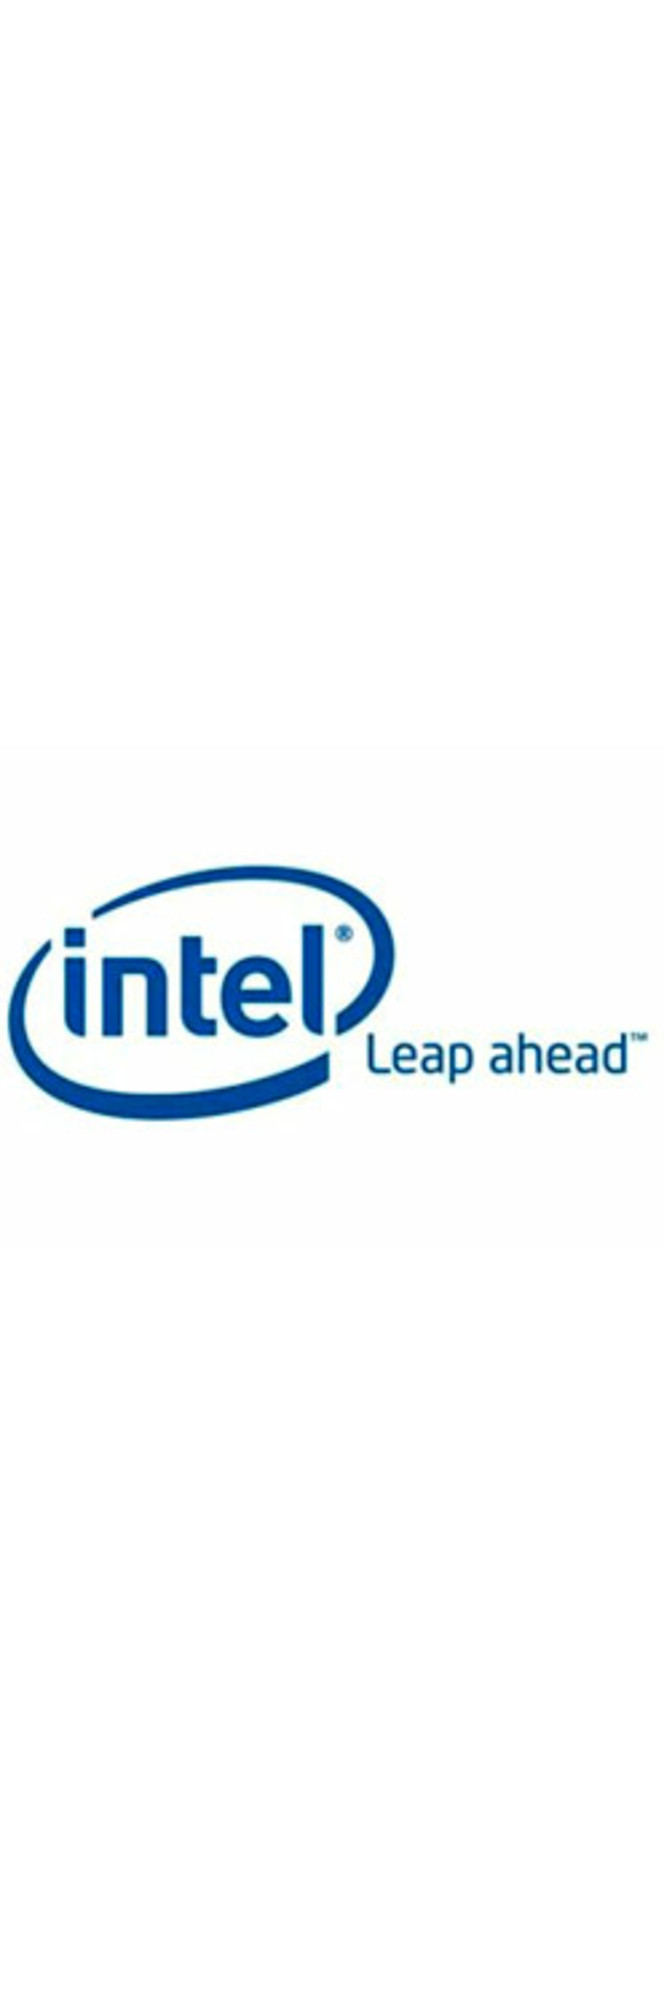 Intel nouveau logo 2006